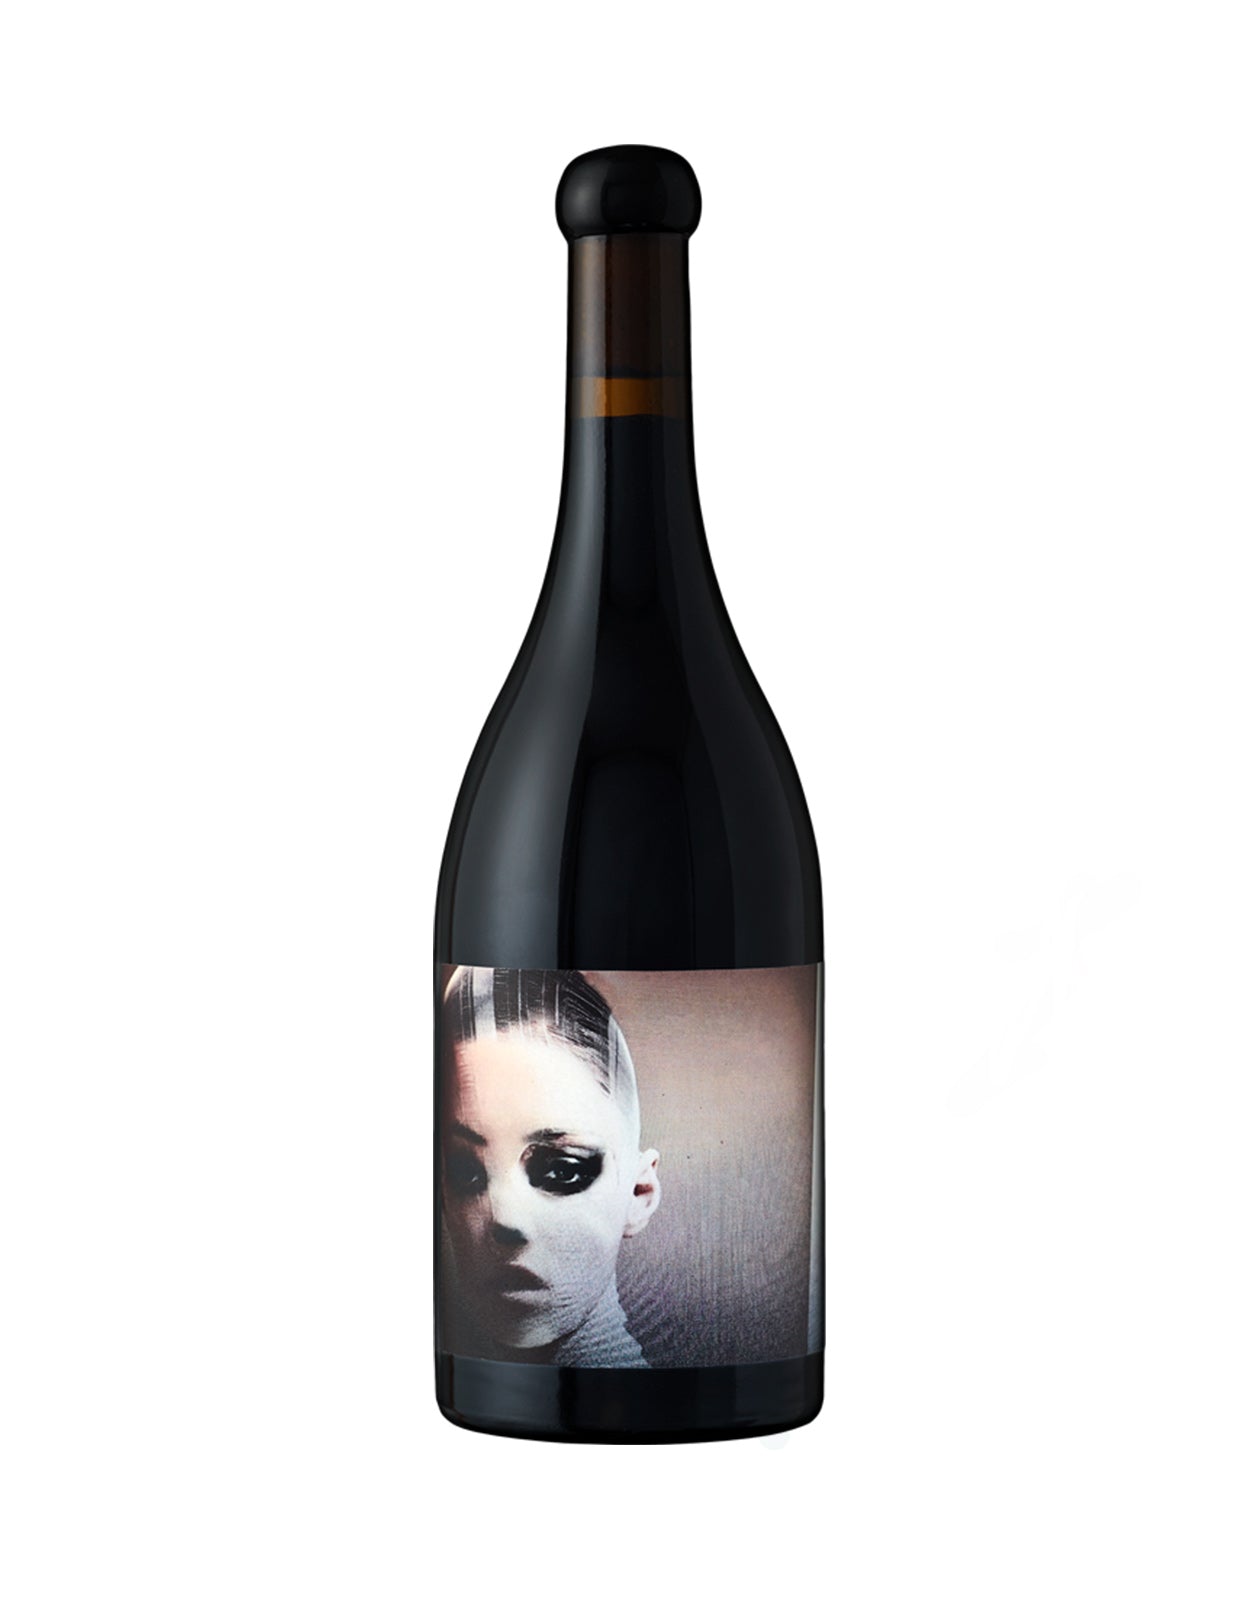 L'Usine Cellars Sleepy Hollow Vineyard Pinot Noir 2018 (Orin Swift)